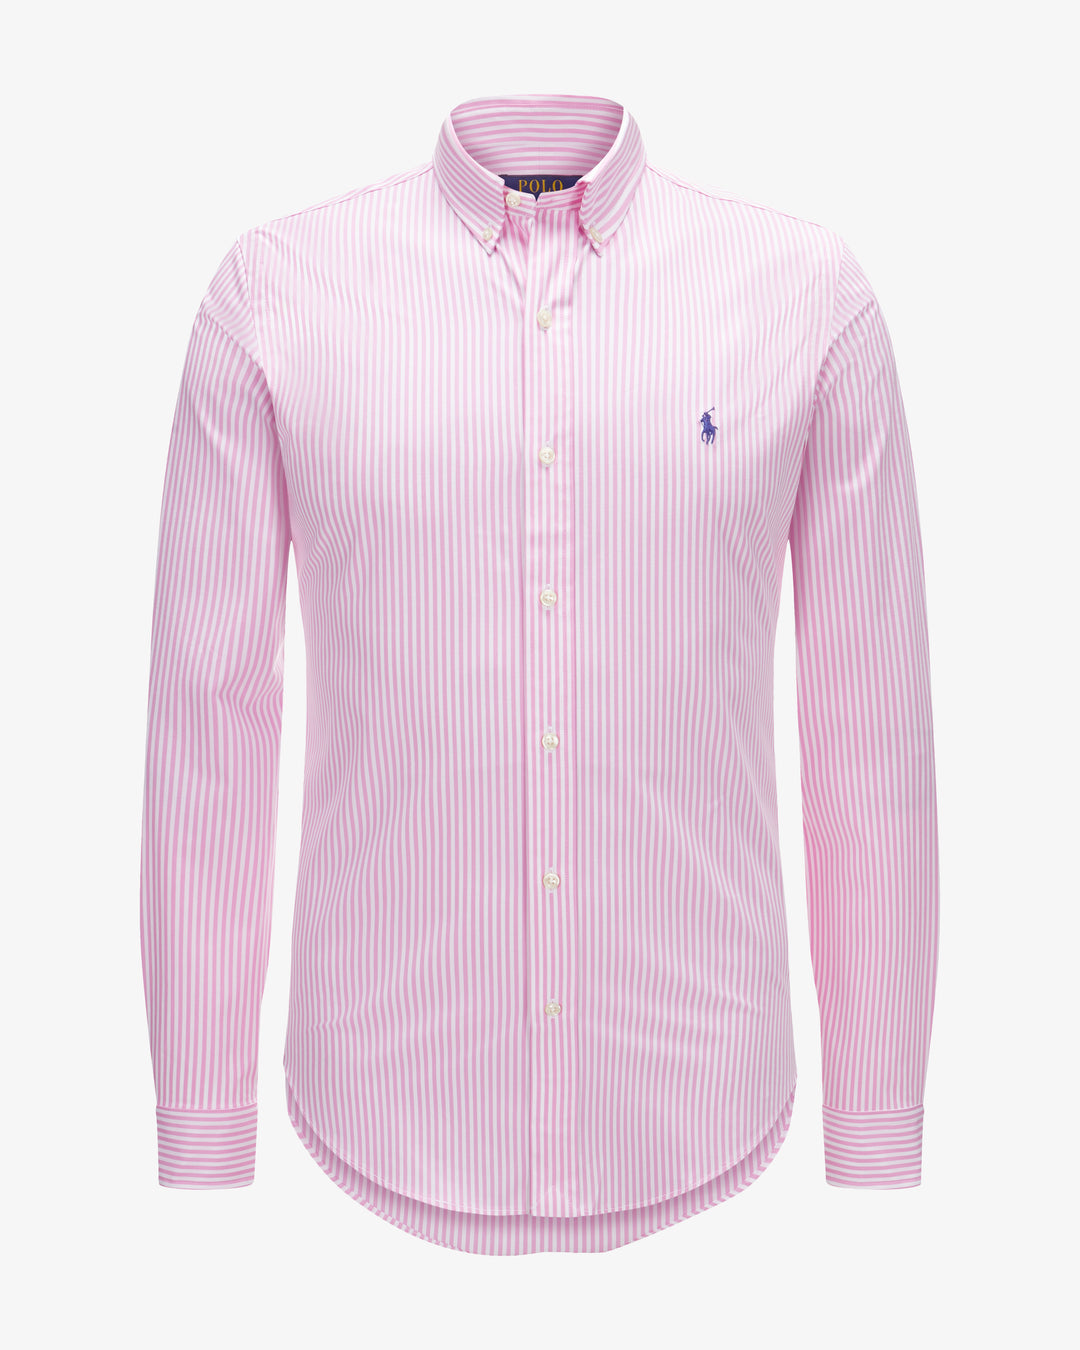 Polo Ralph Lauren Casual shirt slim fit Size Medium - Pink - 3alababak